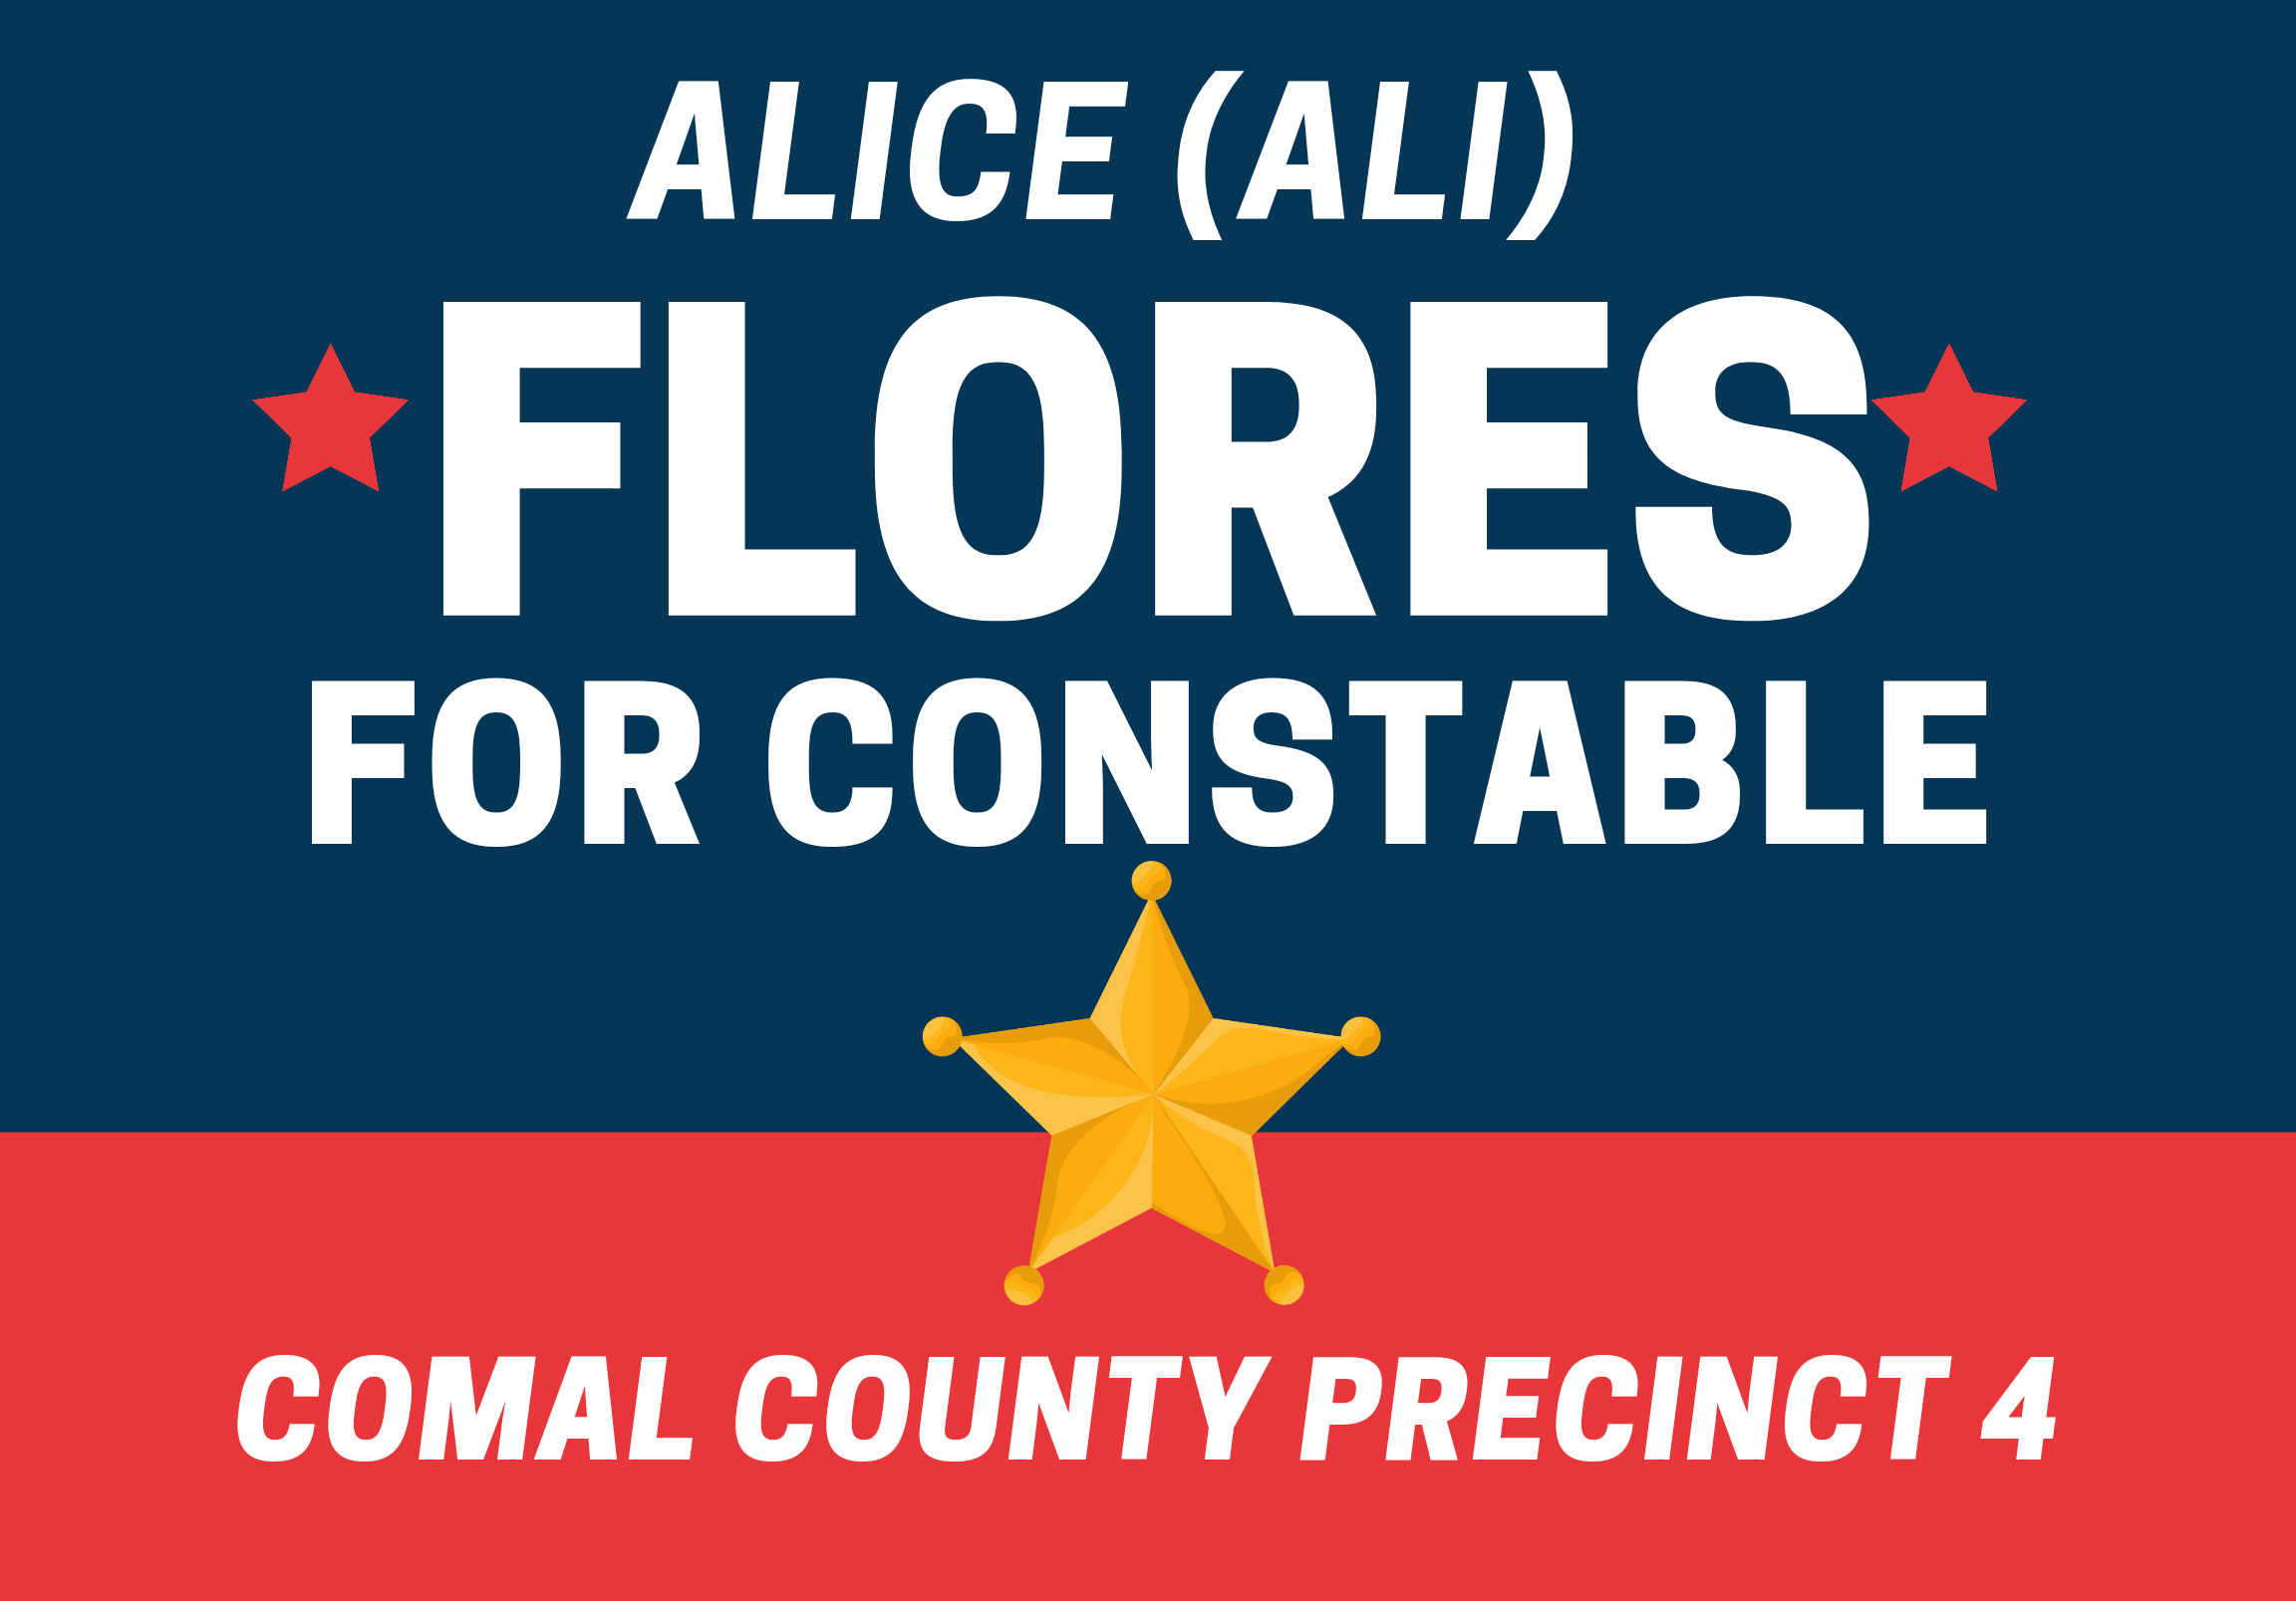 Alice (Ali) Flores for Constable logo